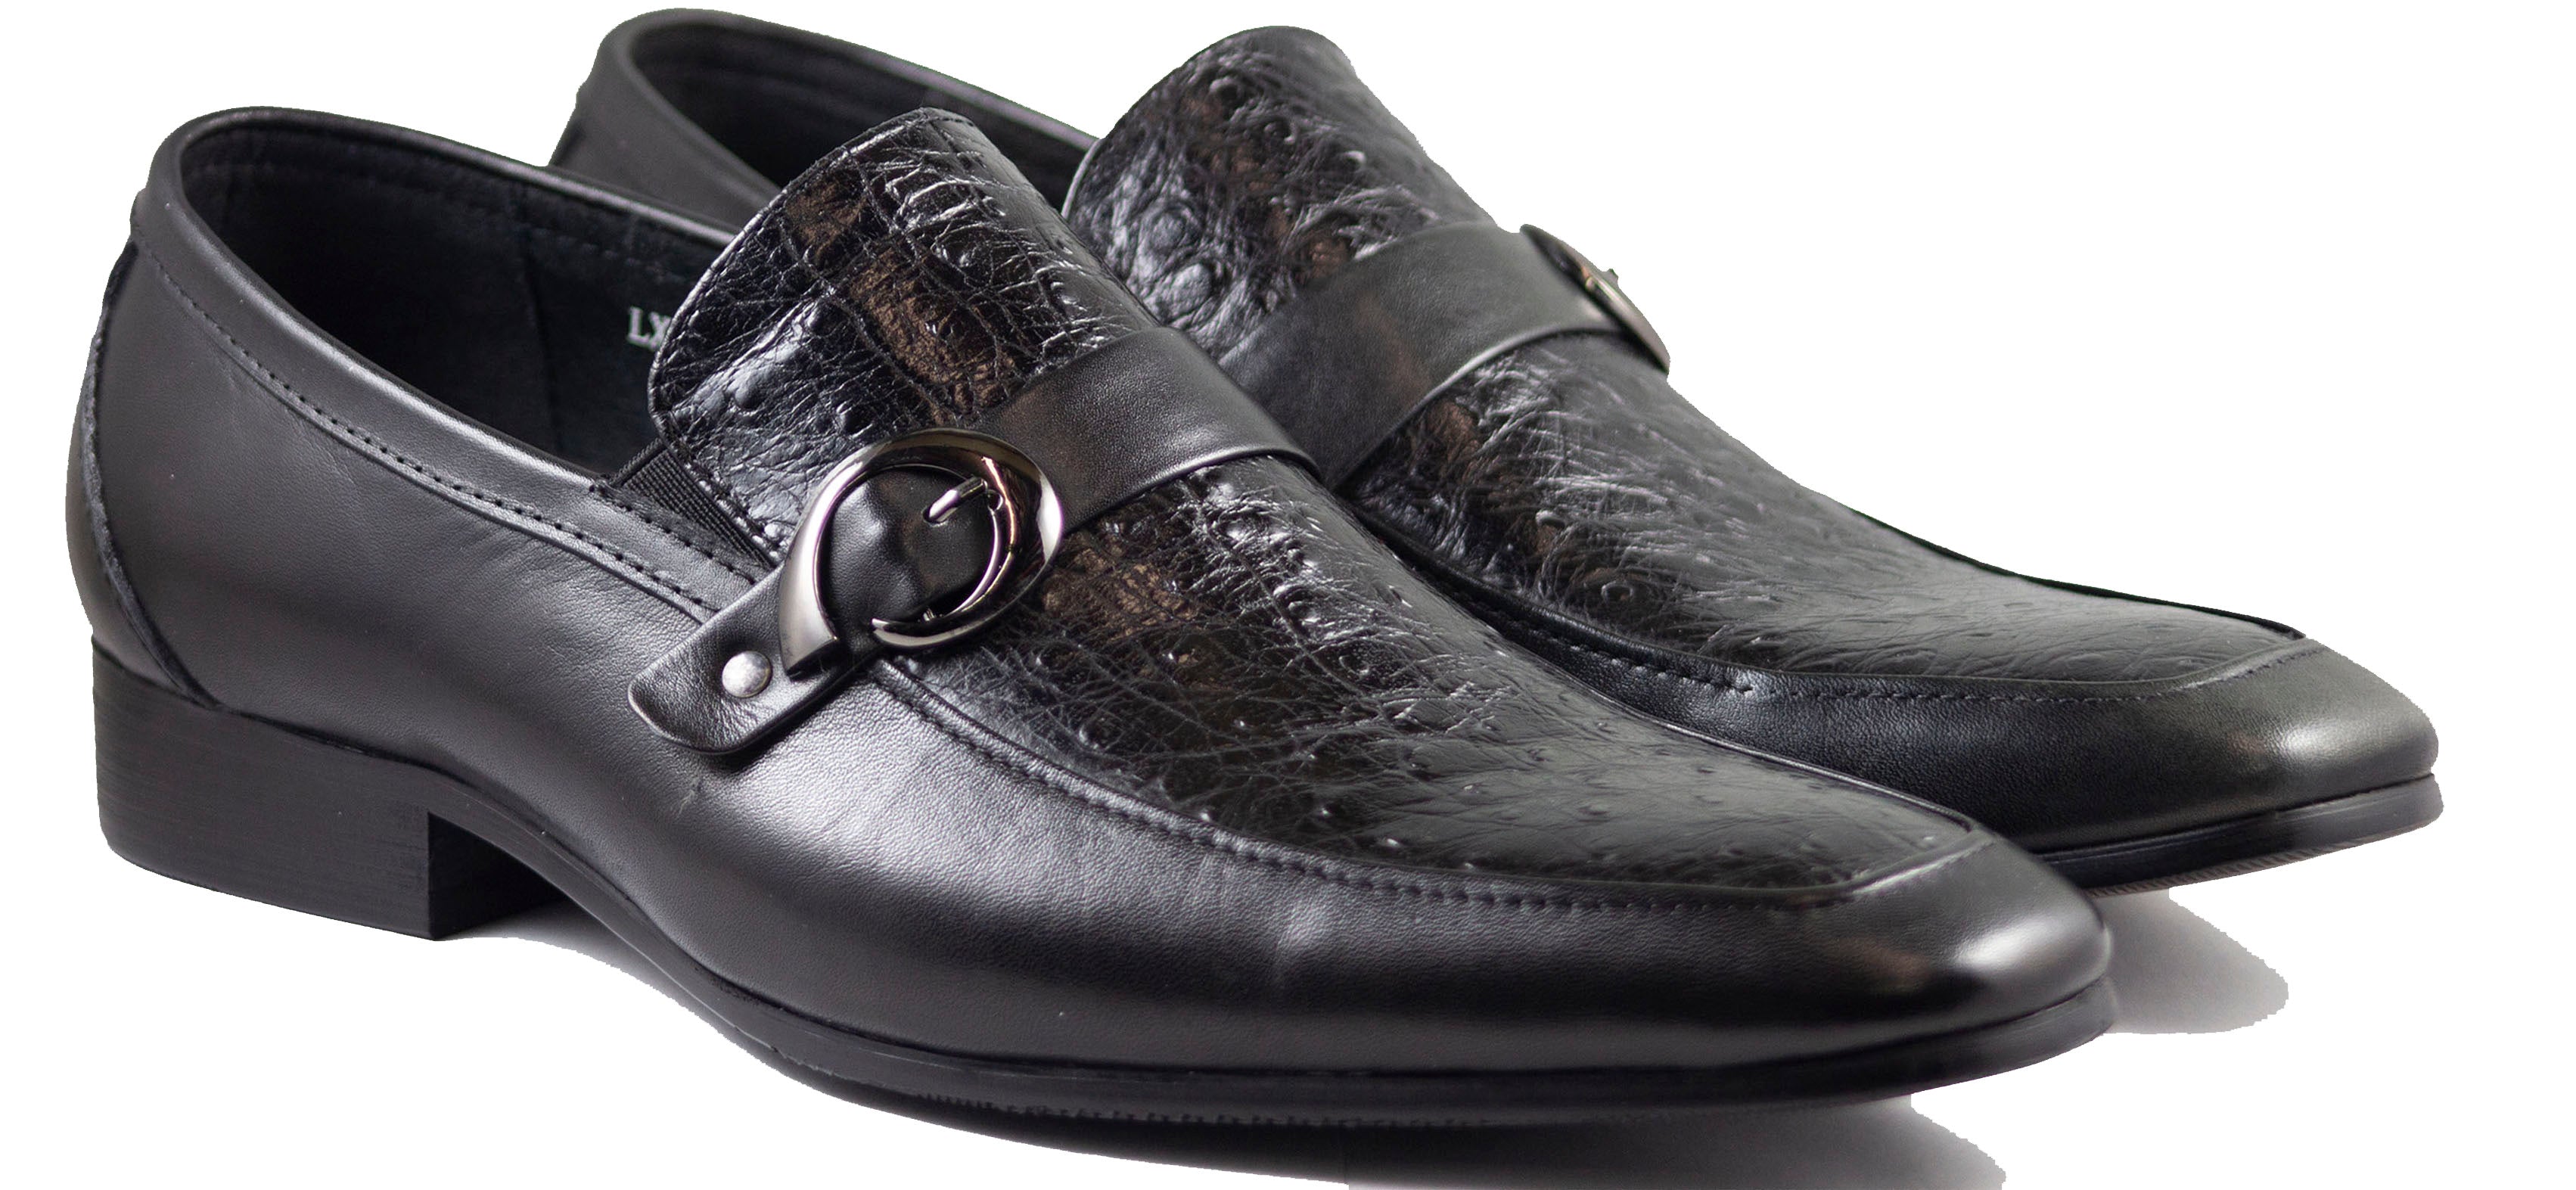 Mario Samello  Men's Dress Shoes  LX1406-W43